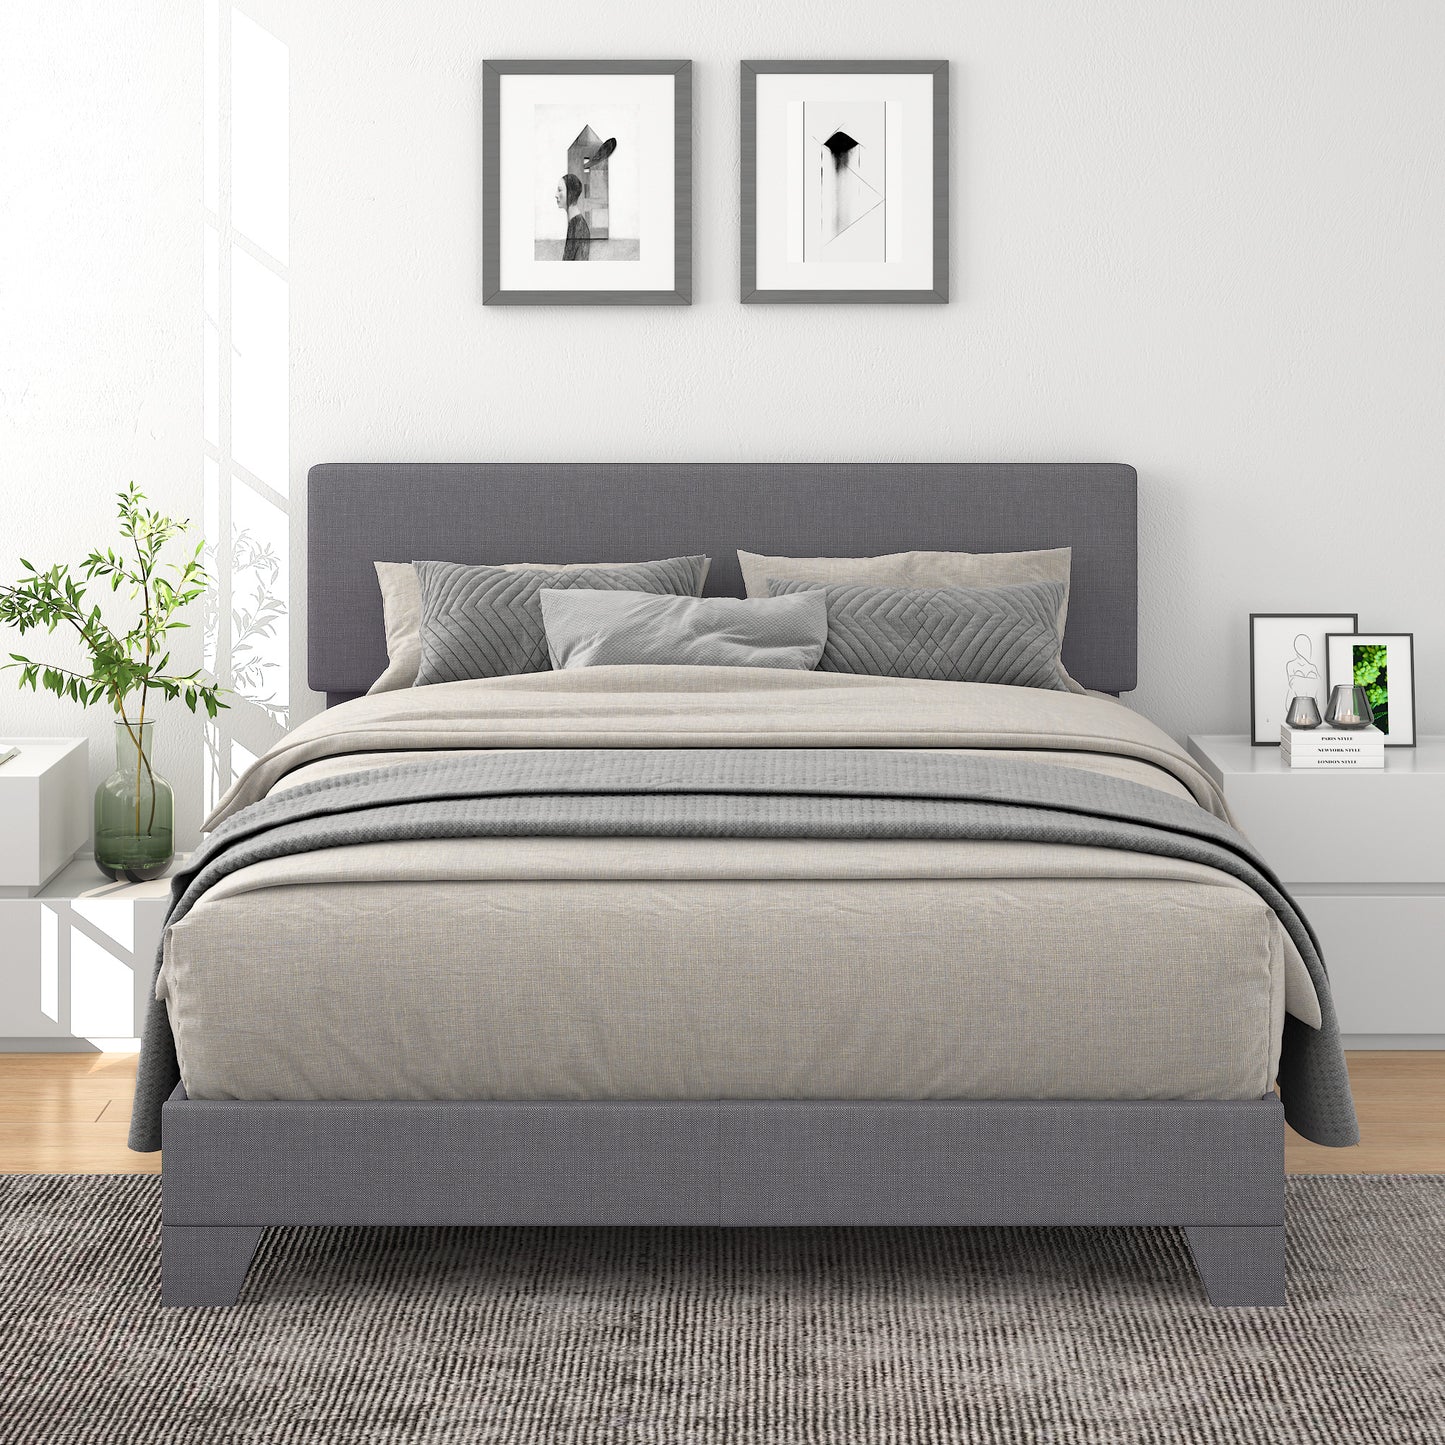 Allewie Platform Bed Fame with Upholstered Adjustable Fabric Headboard